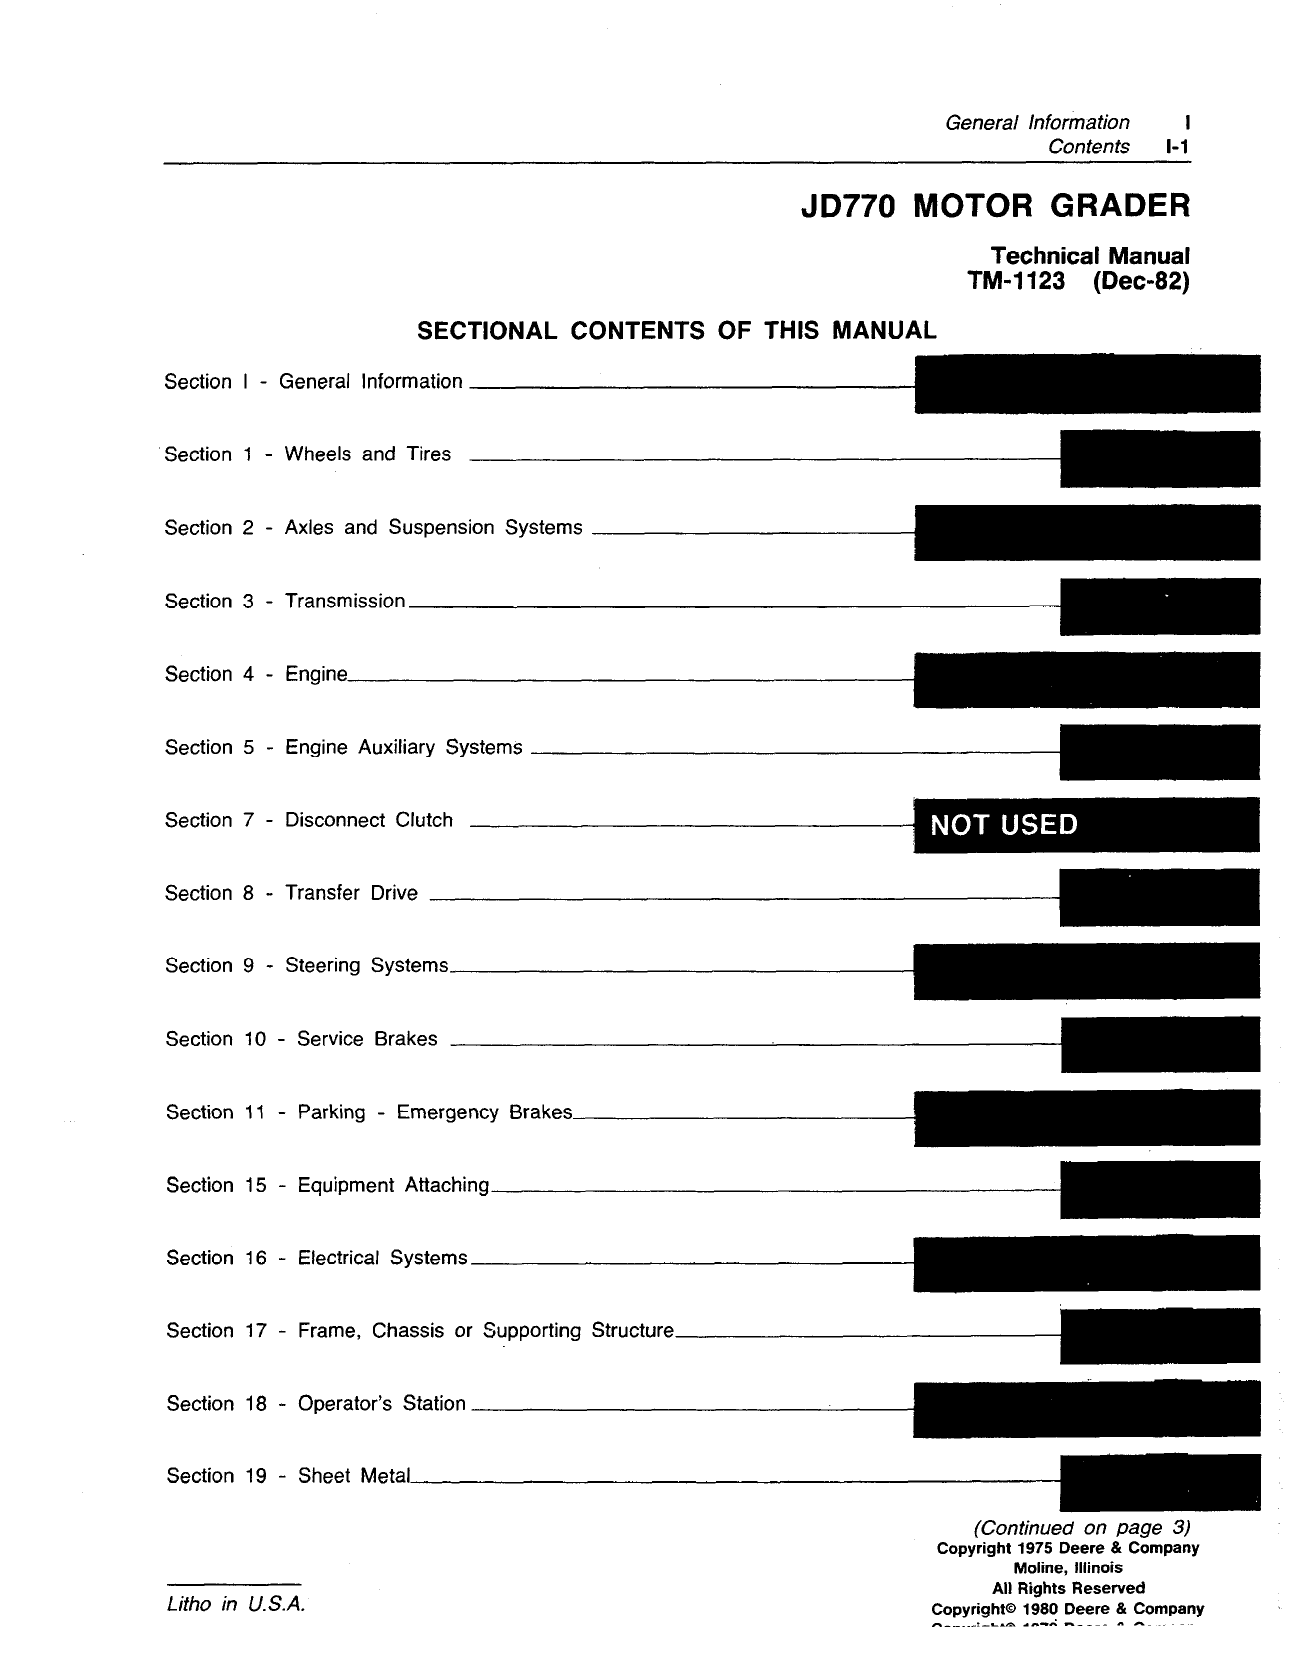 1989-1998 John Deere JD770 Motor Grader technical manual Preview image 3